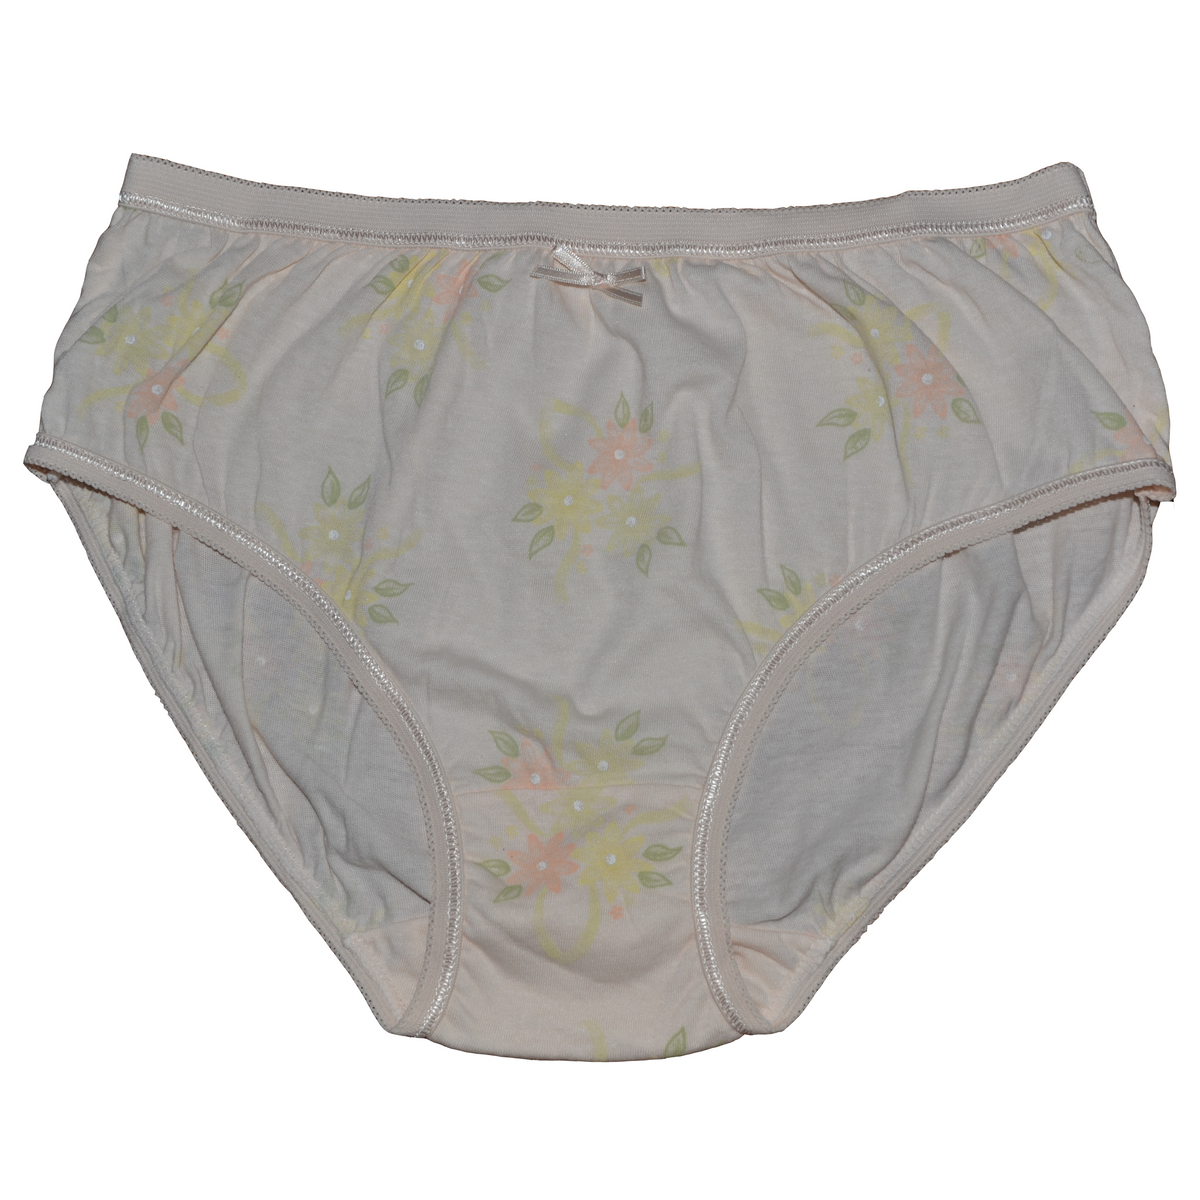 Soen Lady's Panties - Cotton, Bikini